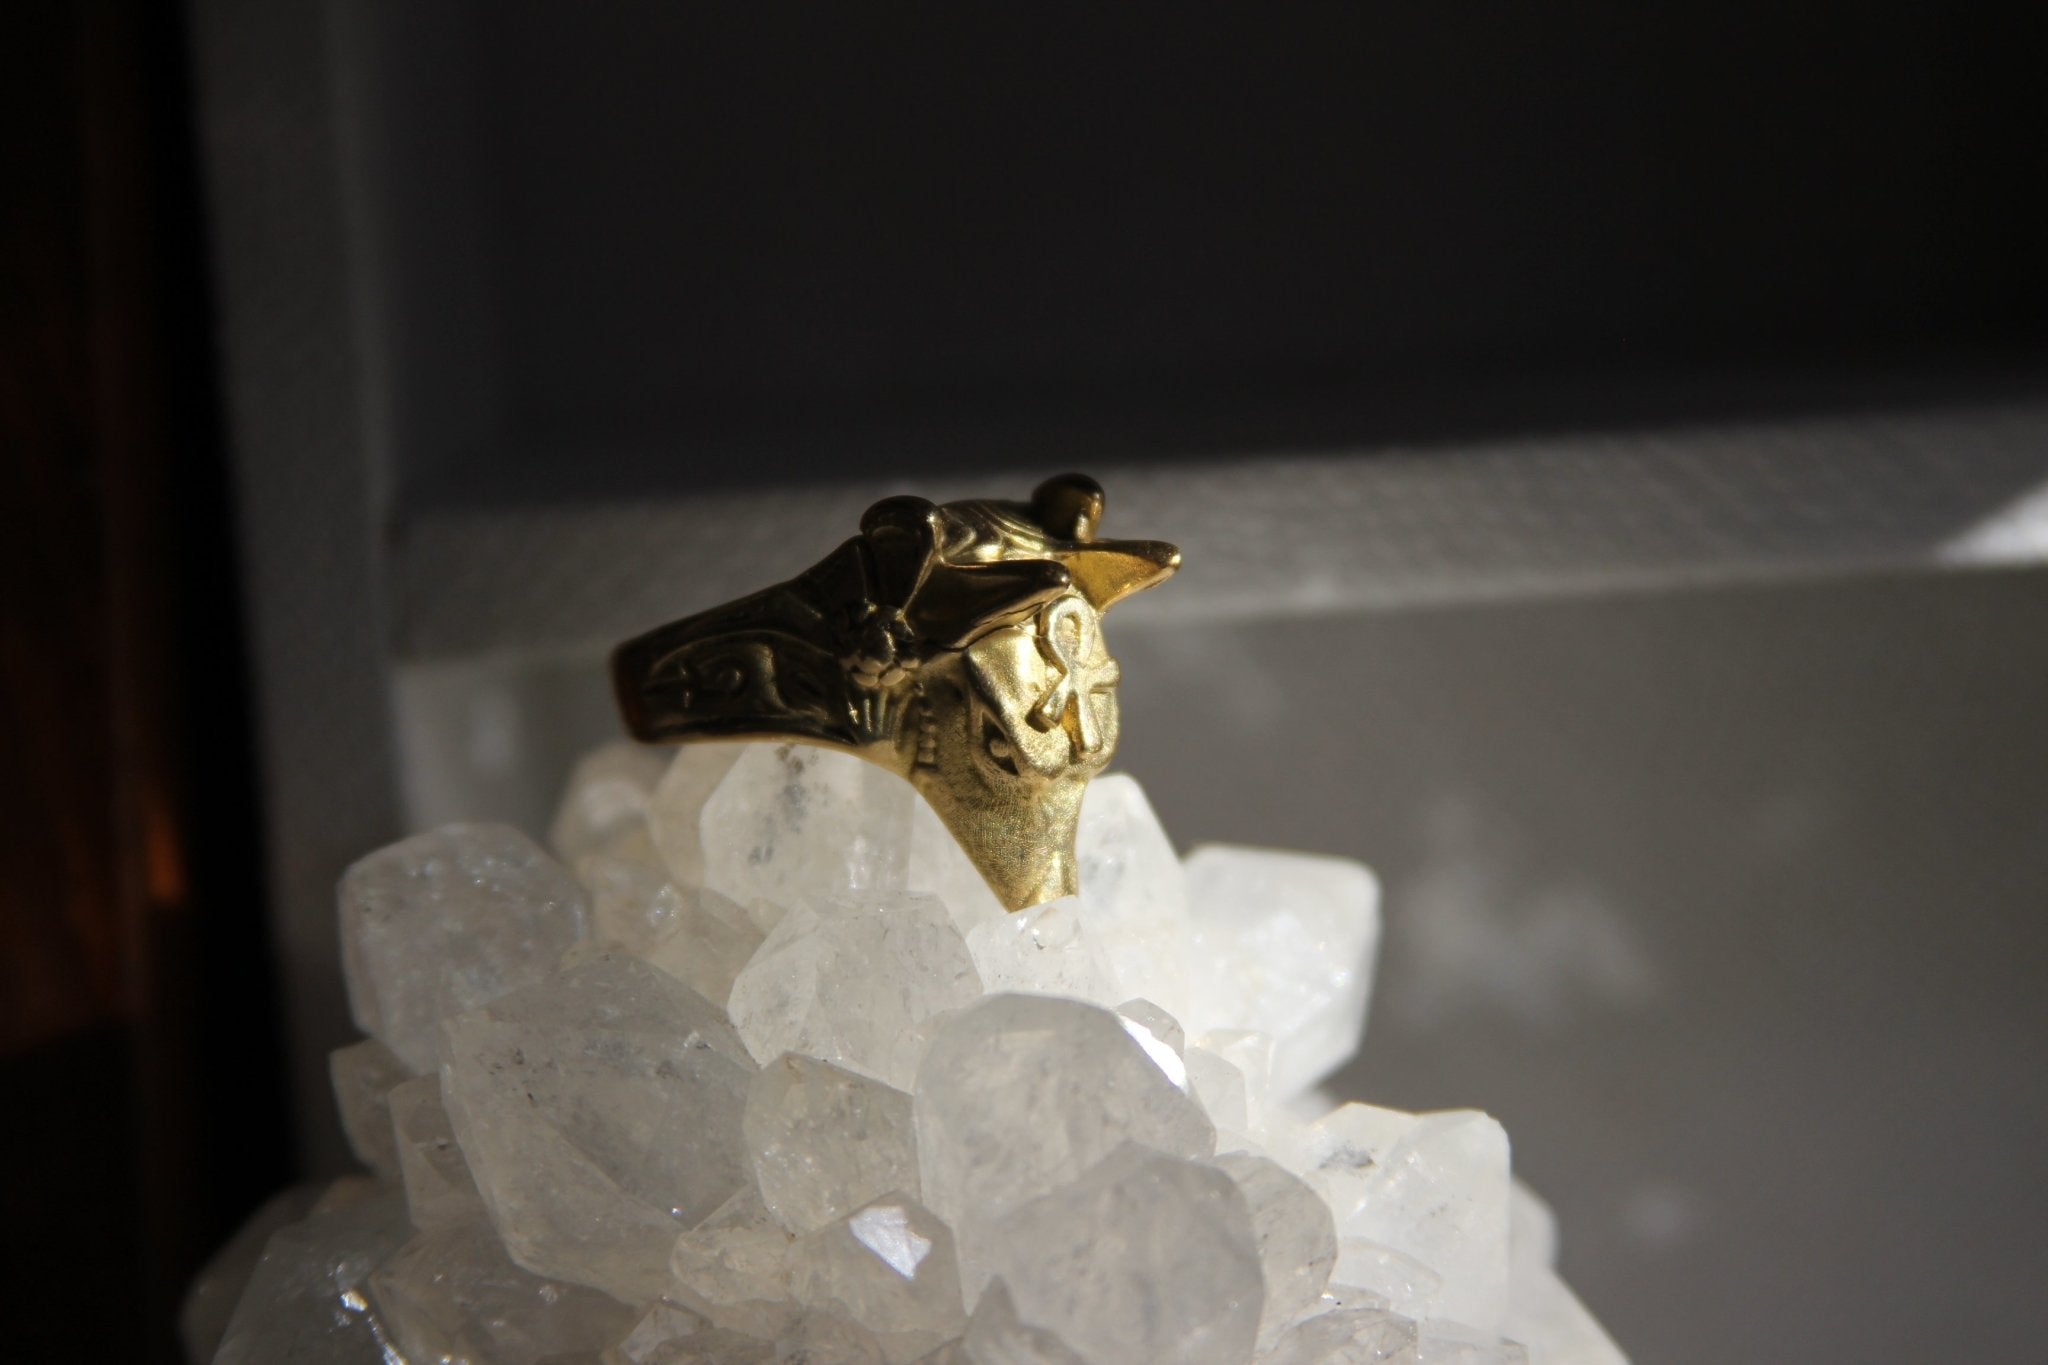 Anubis Brass Ring Jewelry Set - We Love Brass